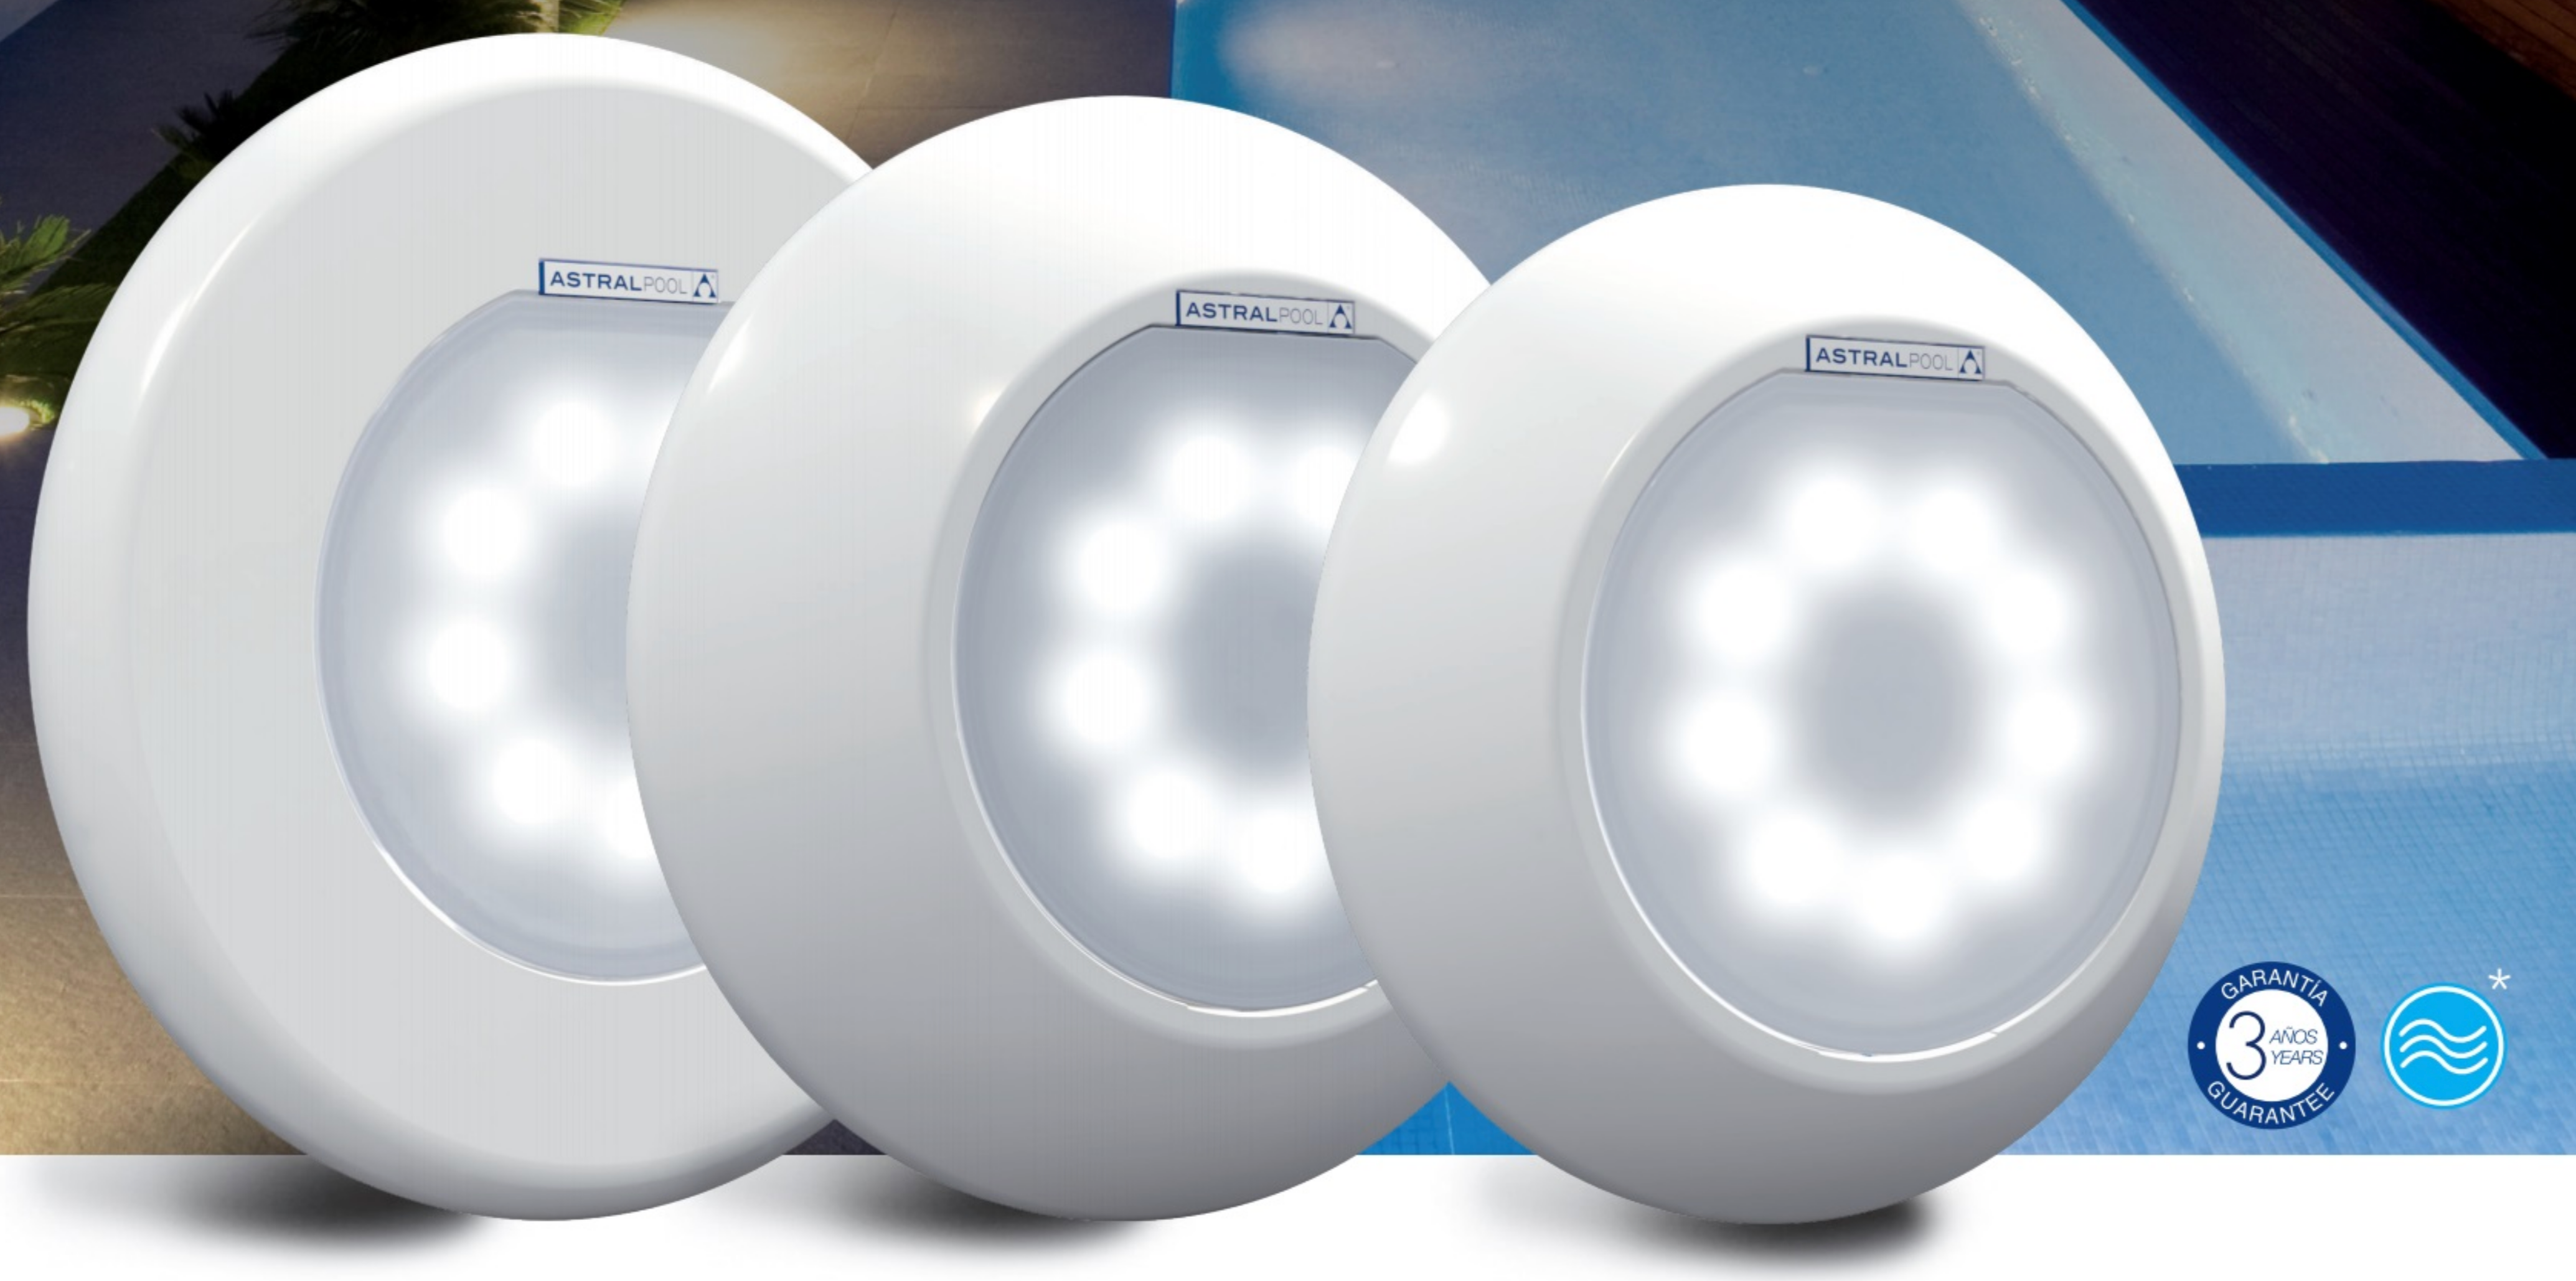 Projector completo LED branco . Lumiplus Flexi - IOT POOL